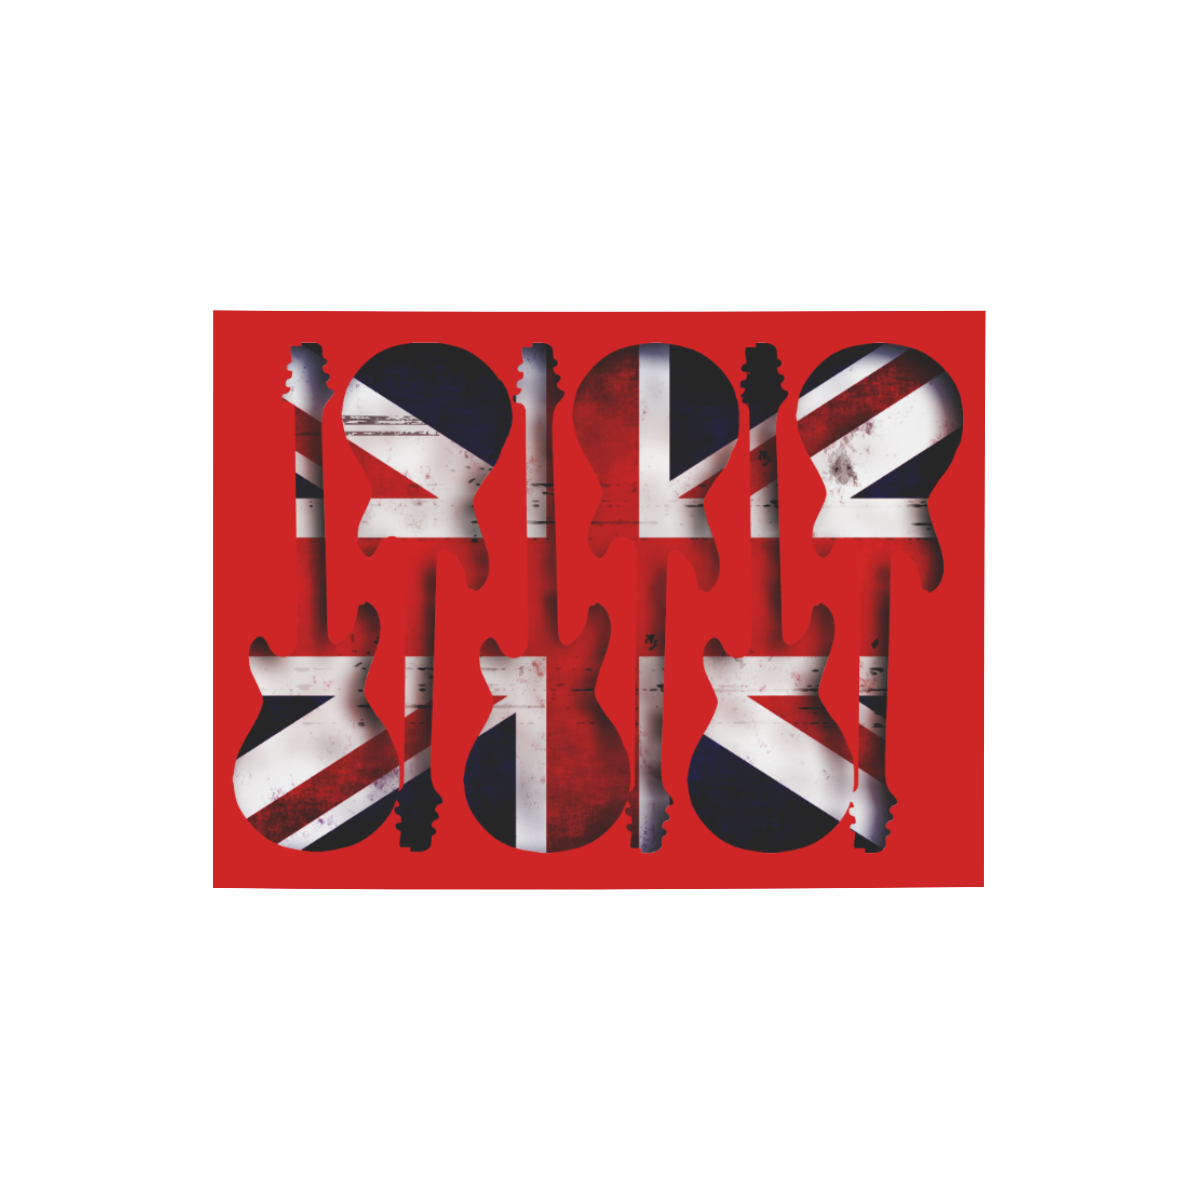 Union Jack British UK Flag Guitars Red Photo Panel for Tabletop Display 8"x6"